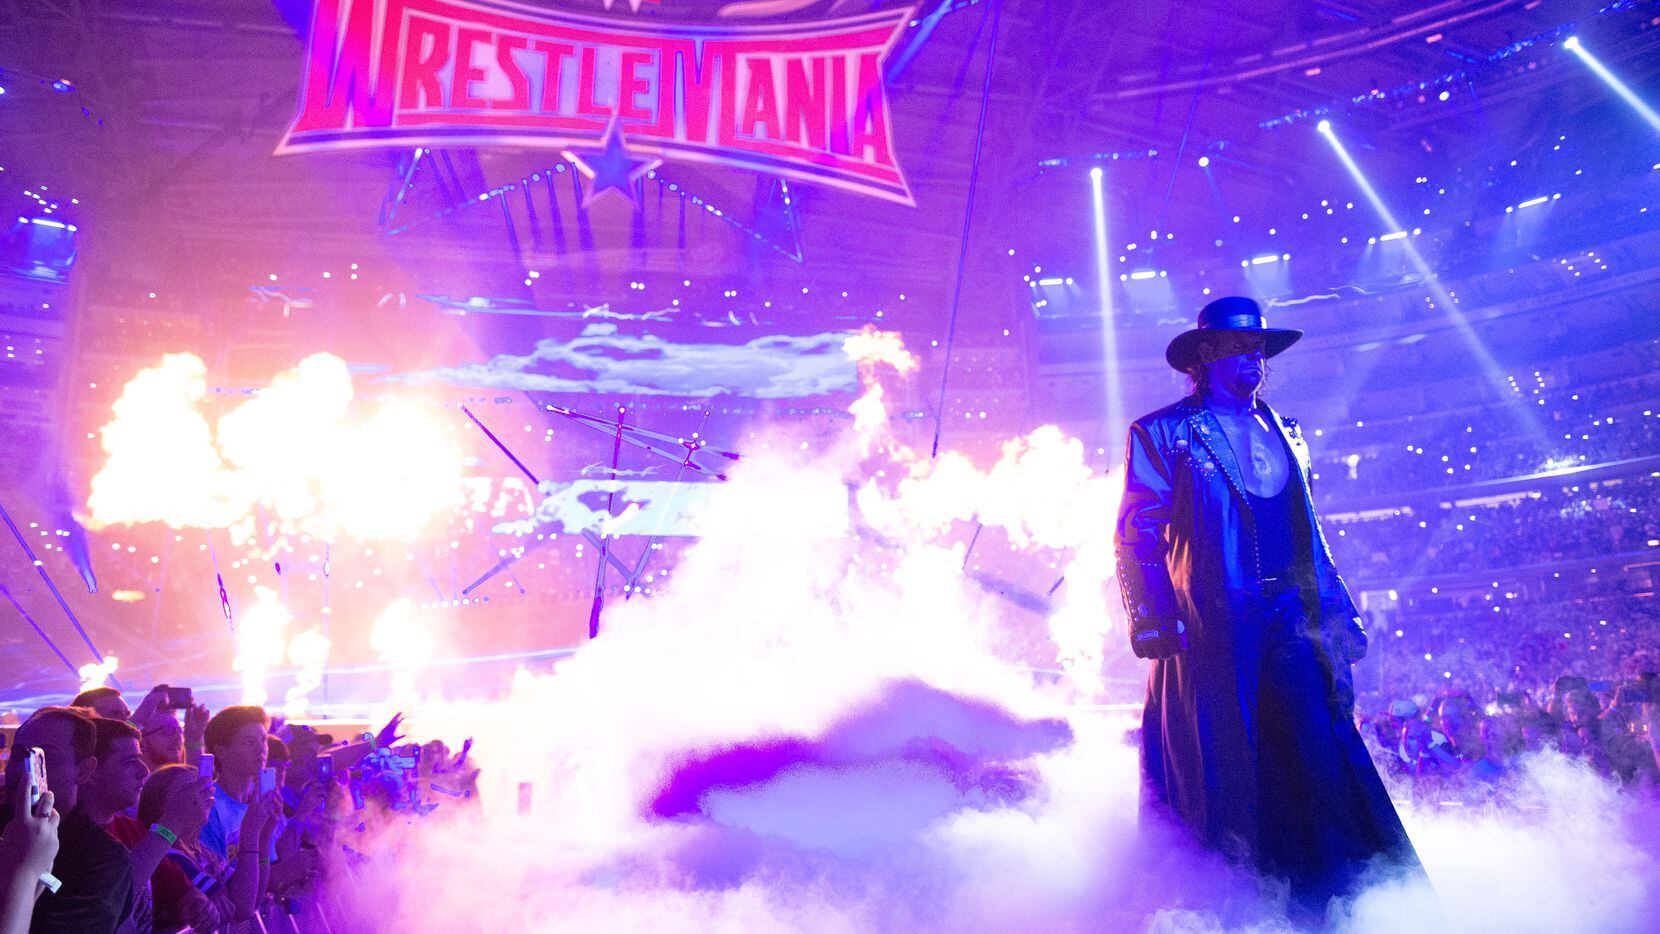 The Undertaker makes his entrance to face Shane McMahon at WrestleMania 32 at AT&T Stadium...